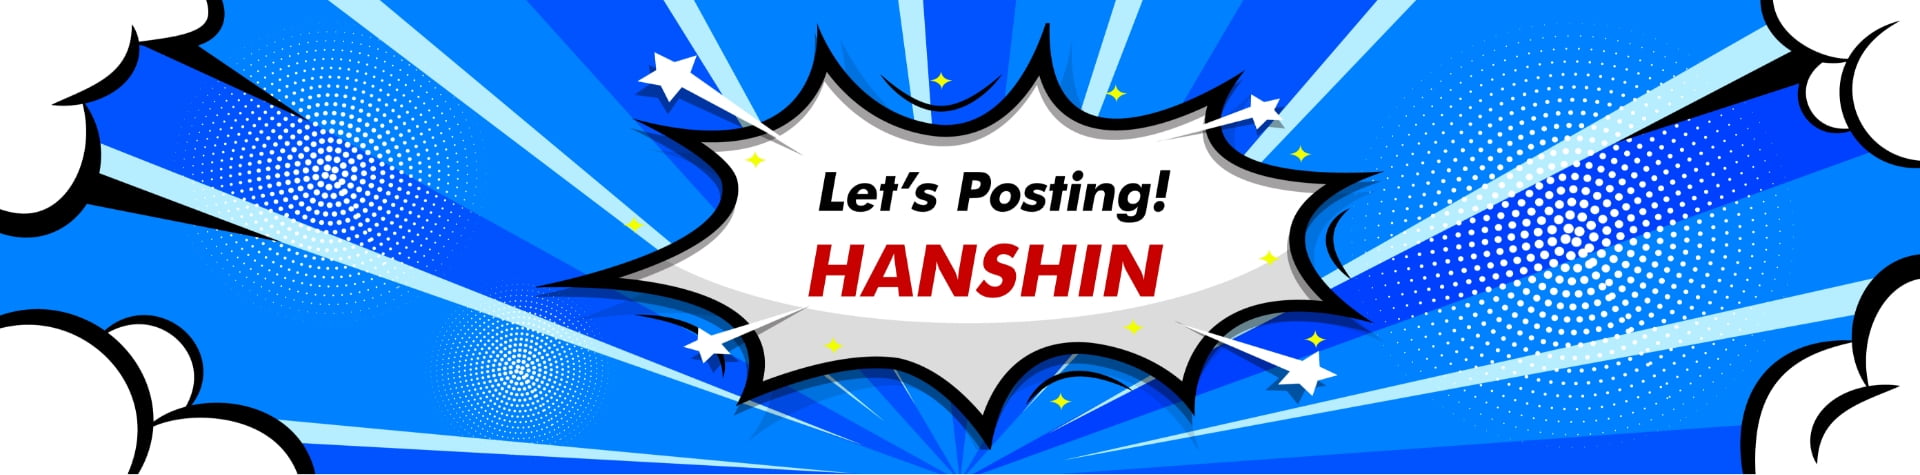 Let's Posting! -hanshin-